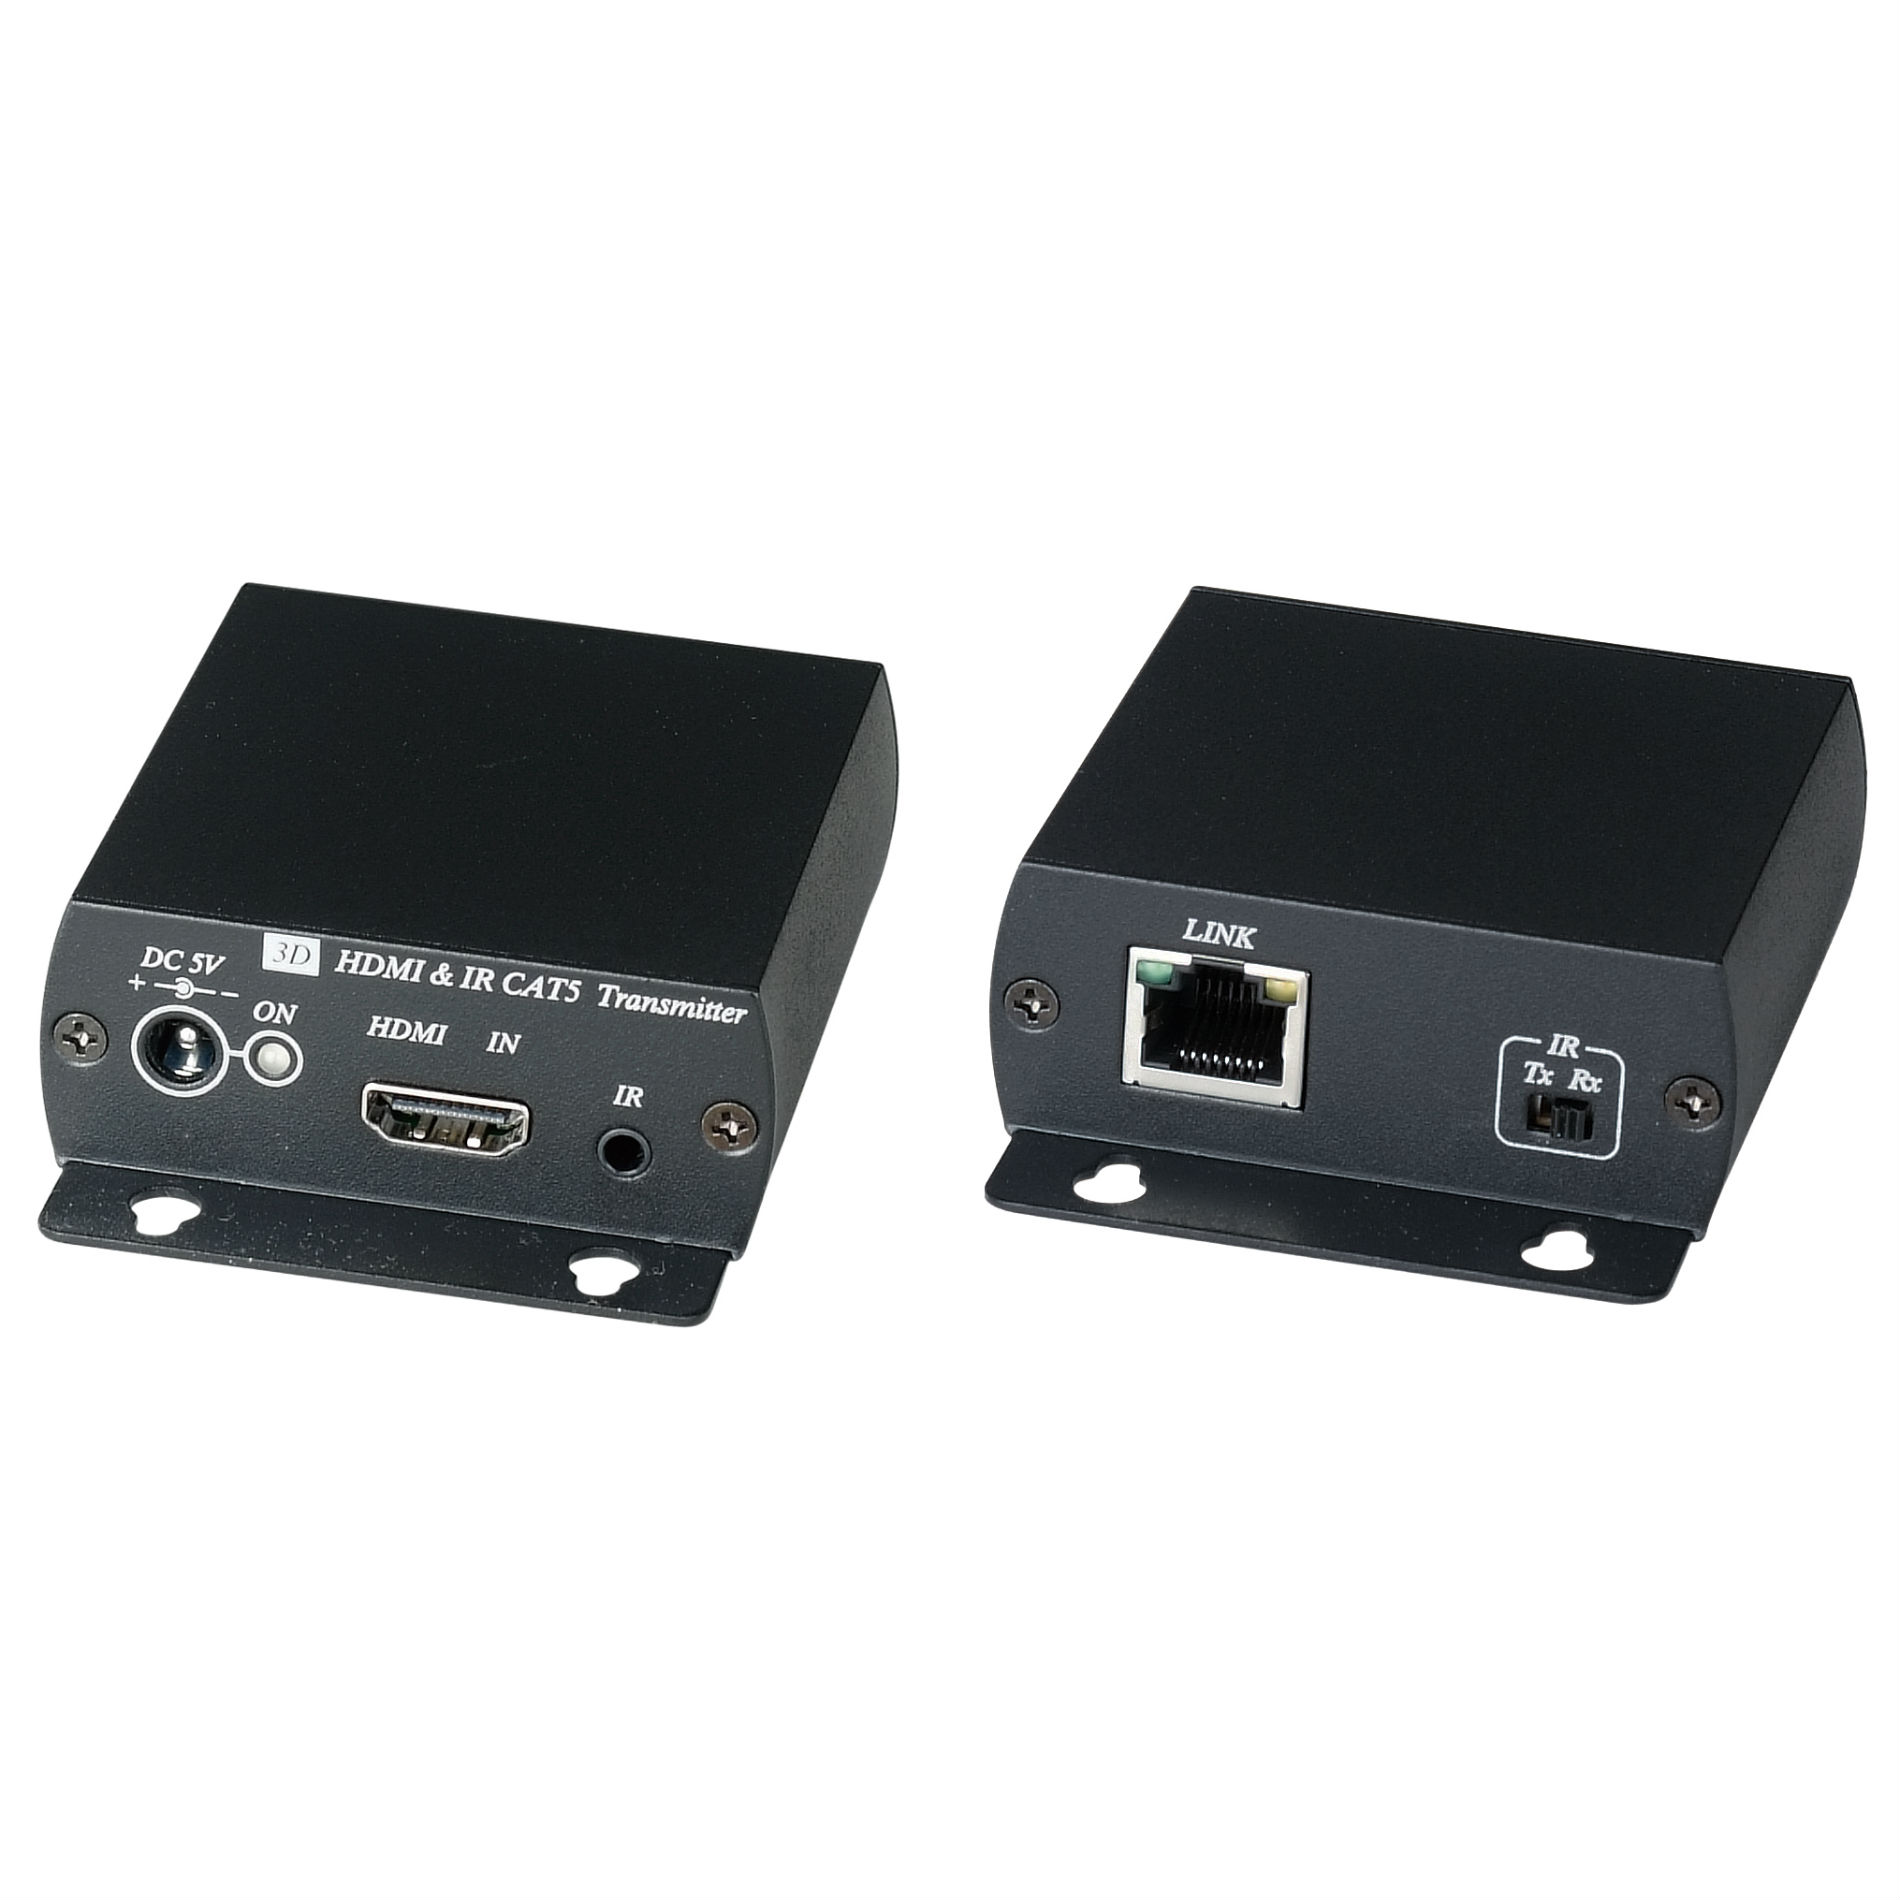 HE01SI - Удлинитель HDMI и ИК сигнала SC&T